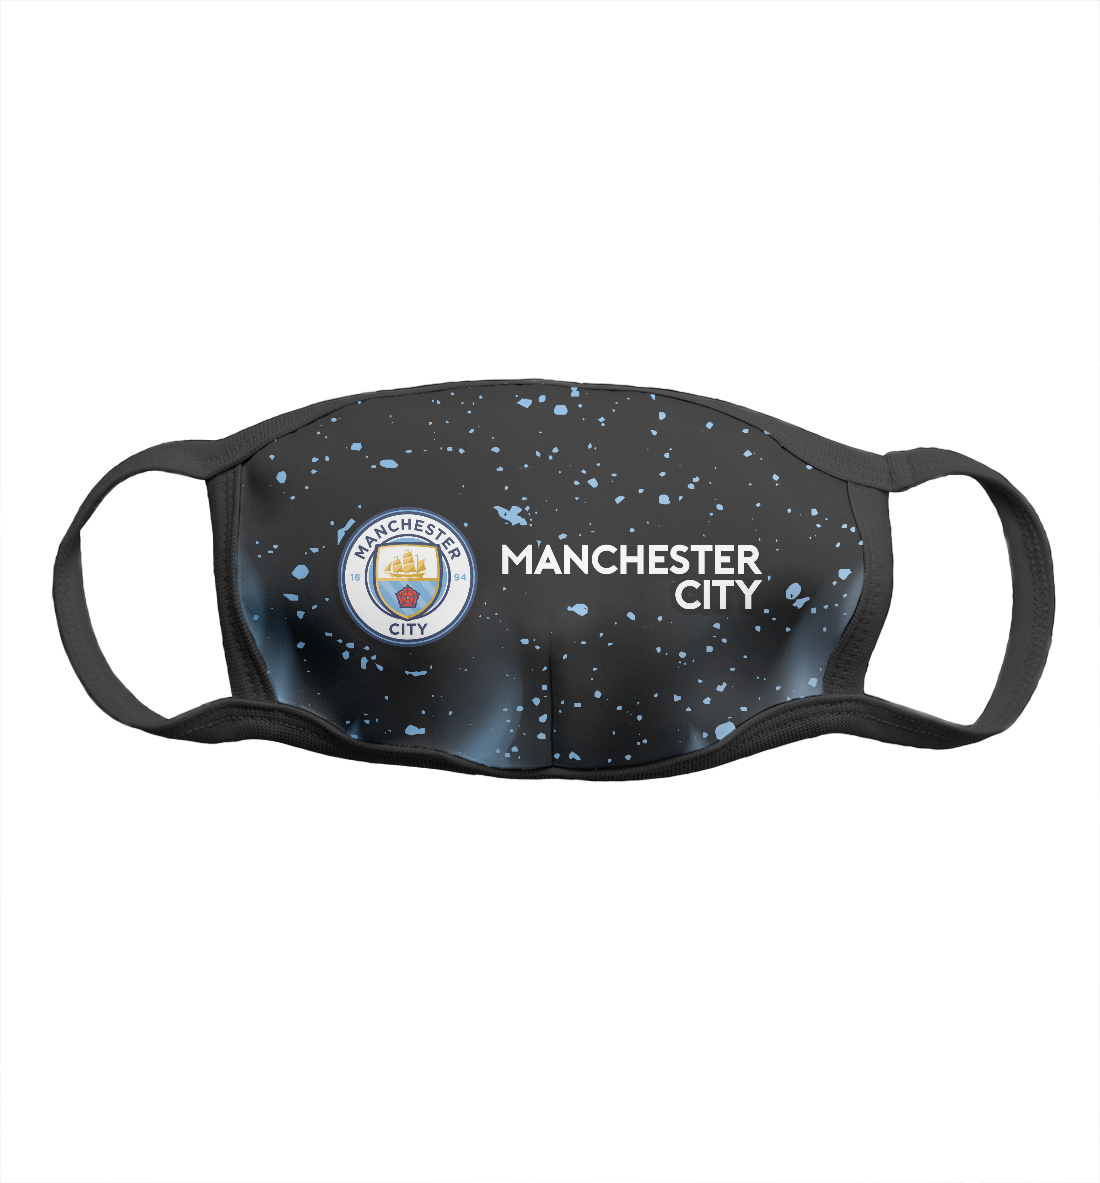 Женская Маска Manchester City / Манчестер Сити, артикул MNC-517850-msk-1mp